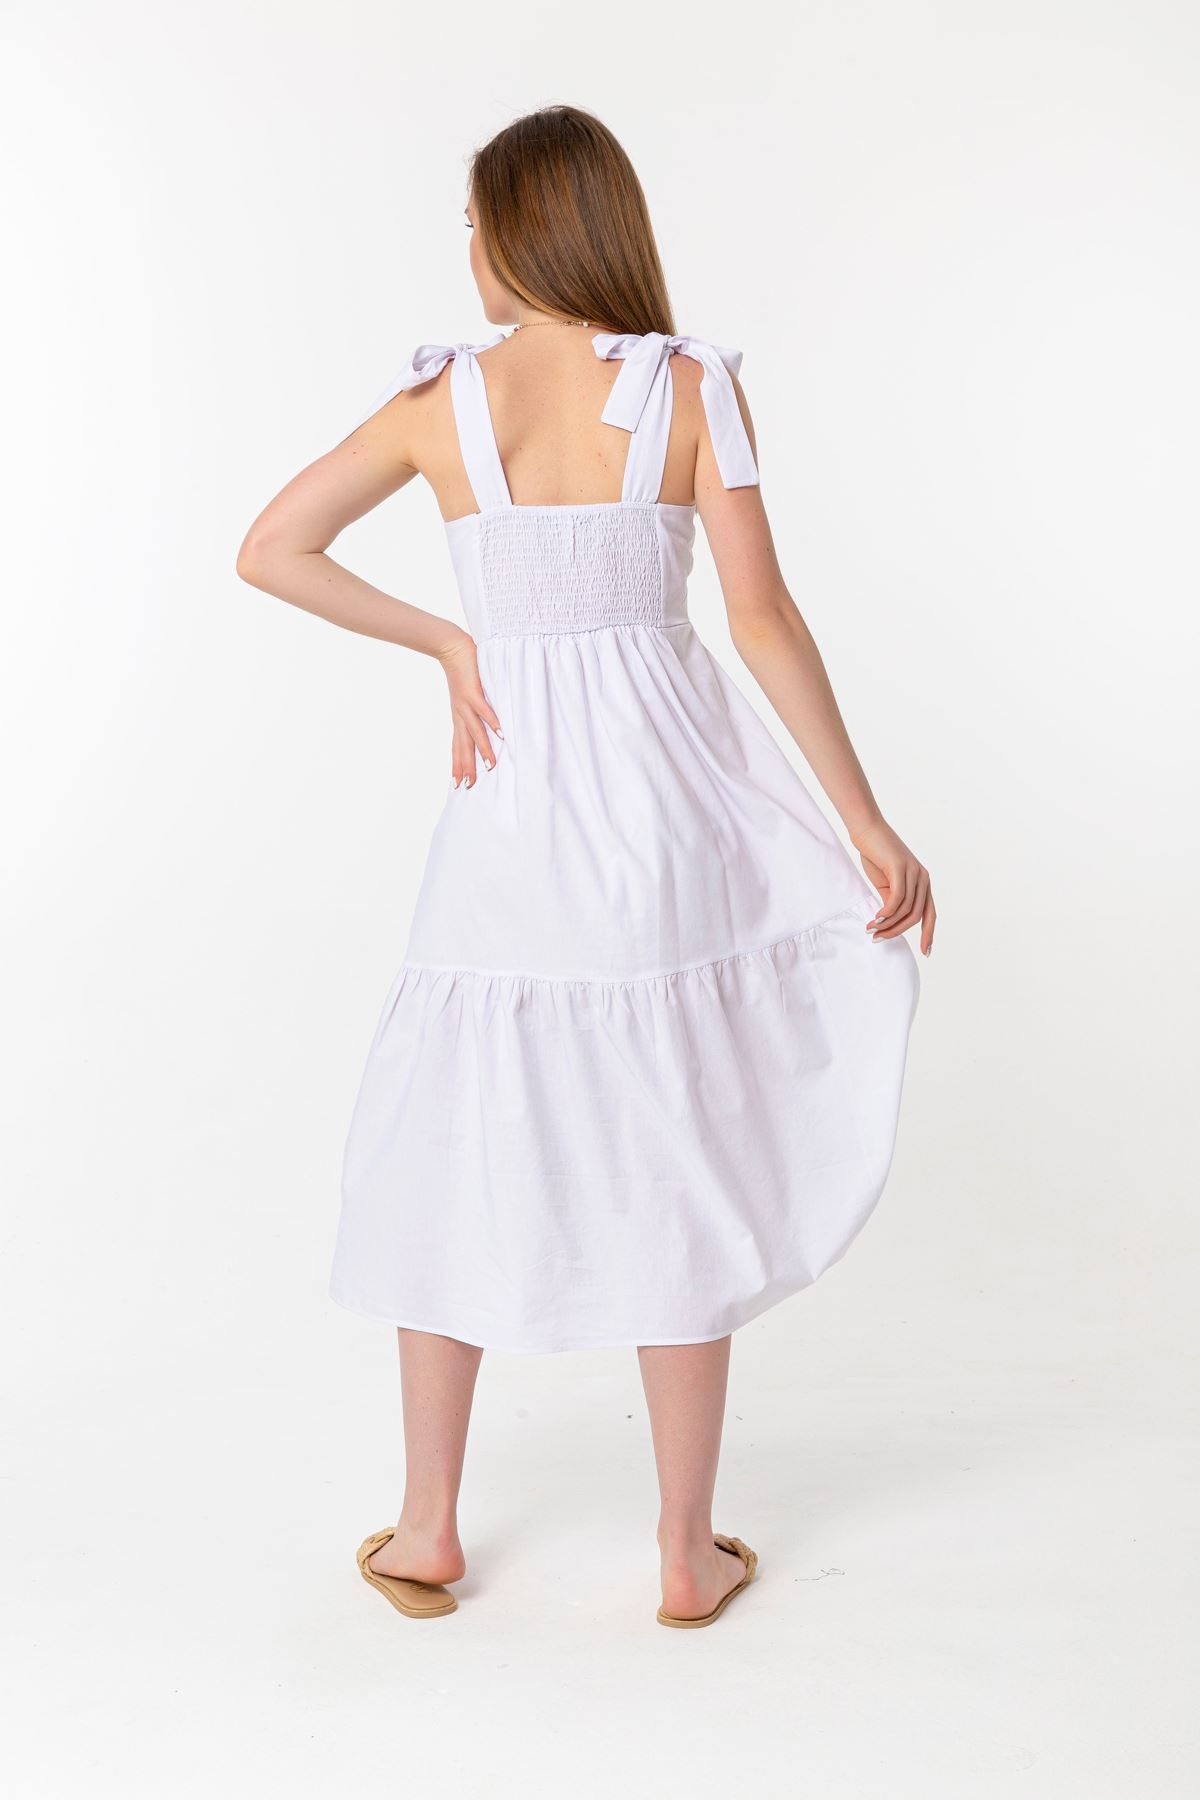 Soft Fabric Sleeveless Straped Shoulder Midi Long Women Dress - White